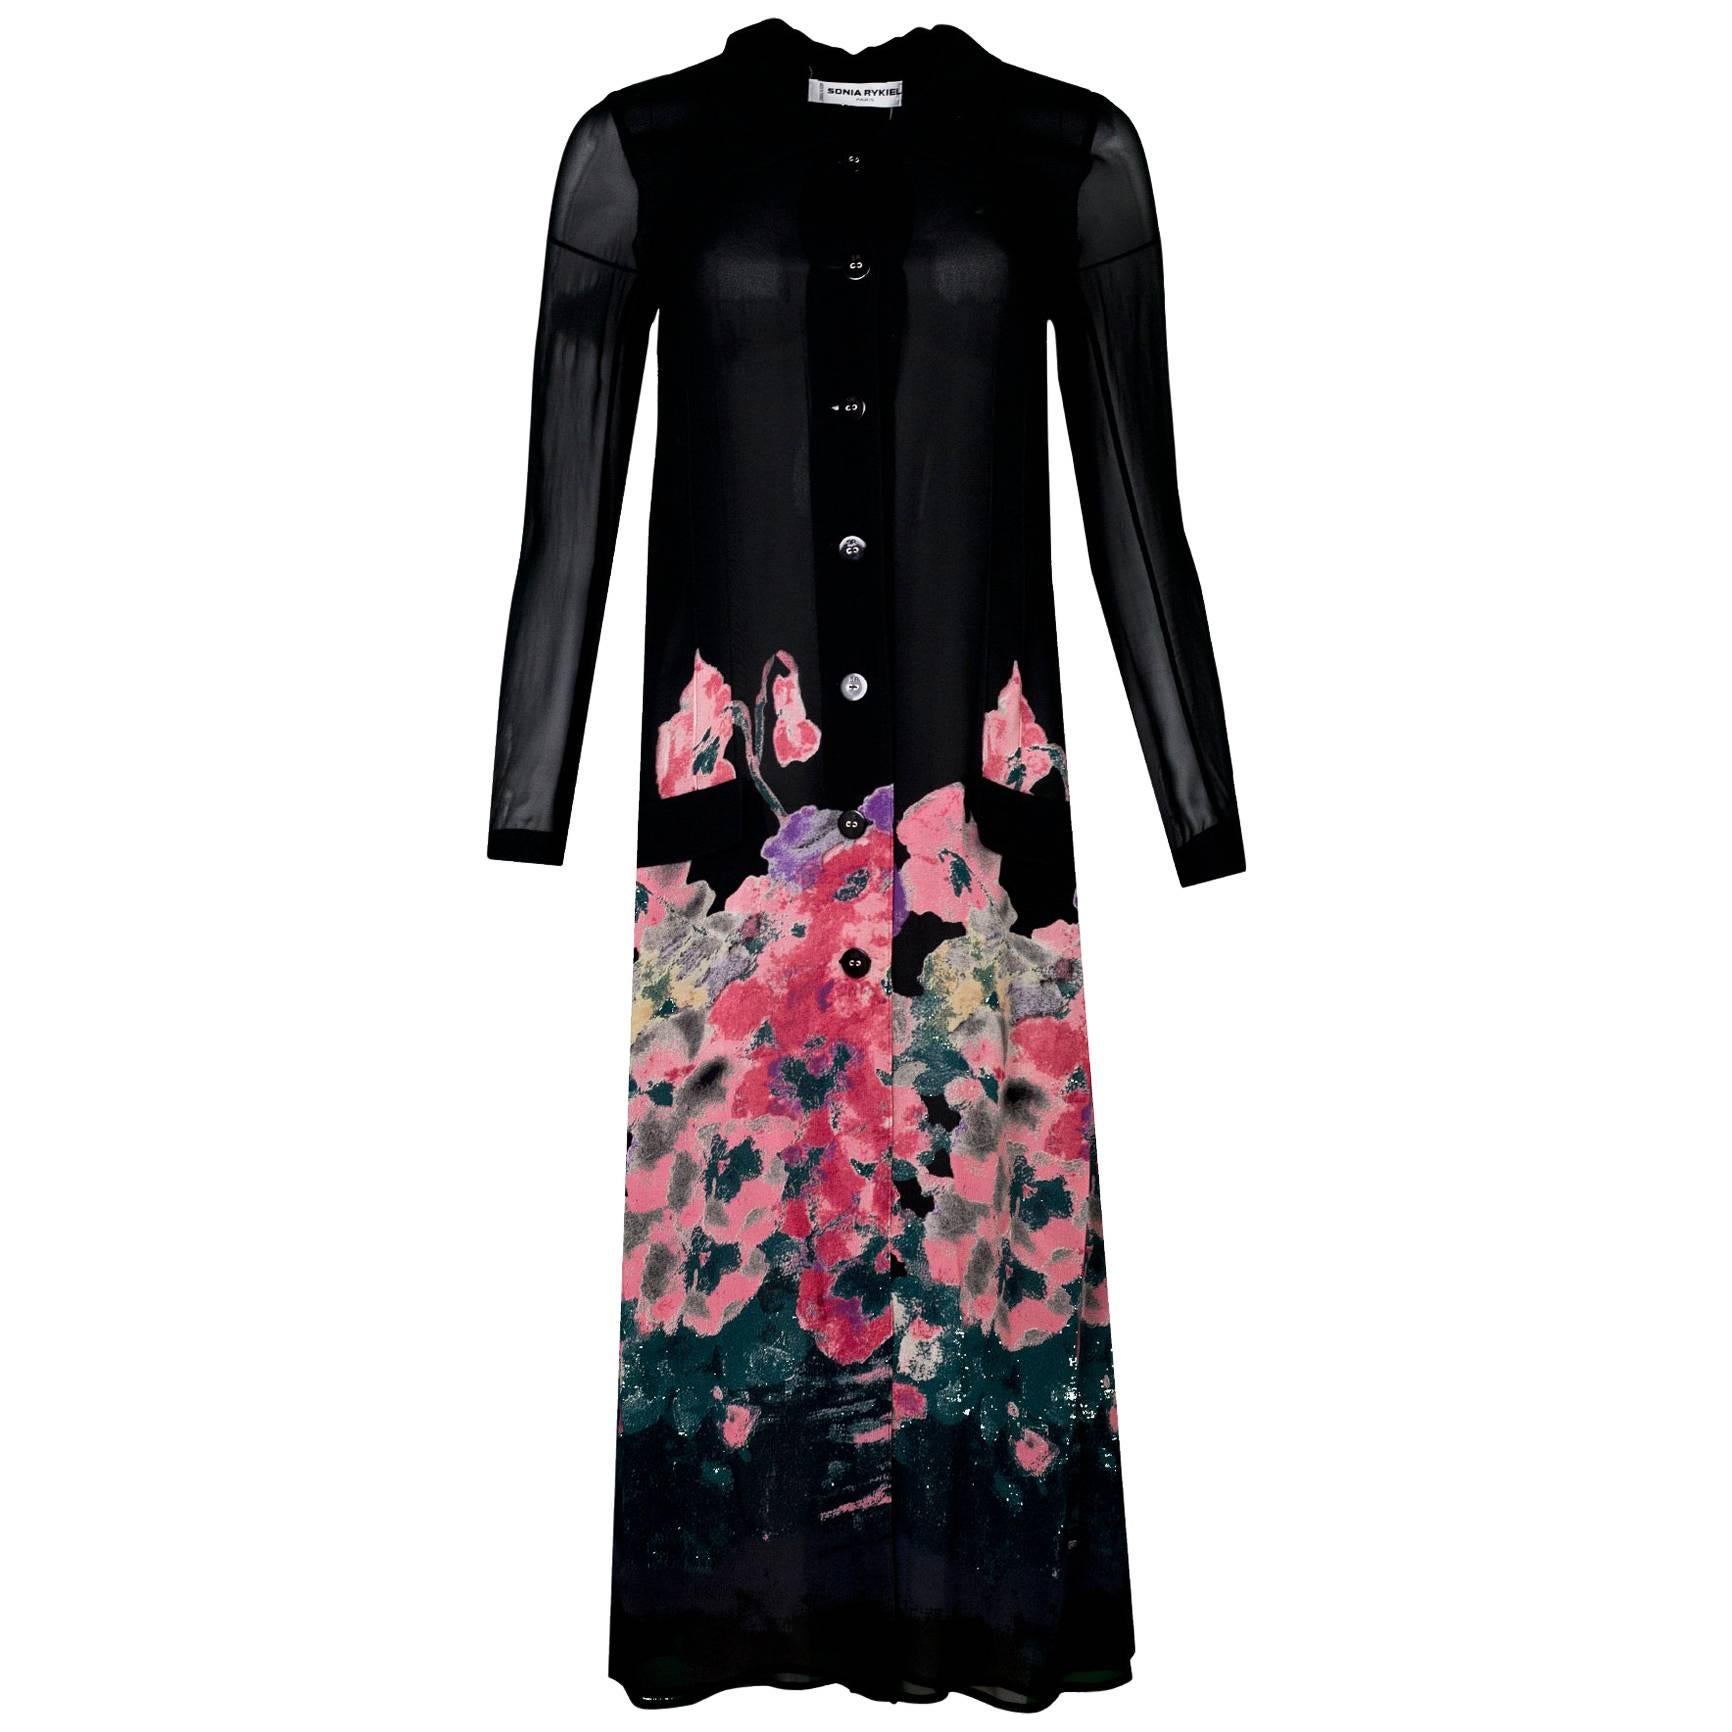 Sonia Rykiel Black & Pink Floral Sheer Duster/Dress Sz M